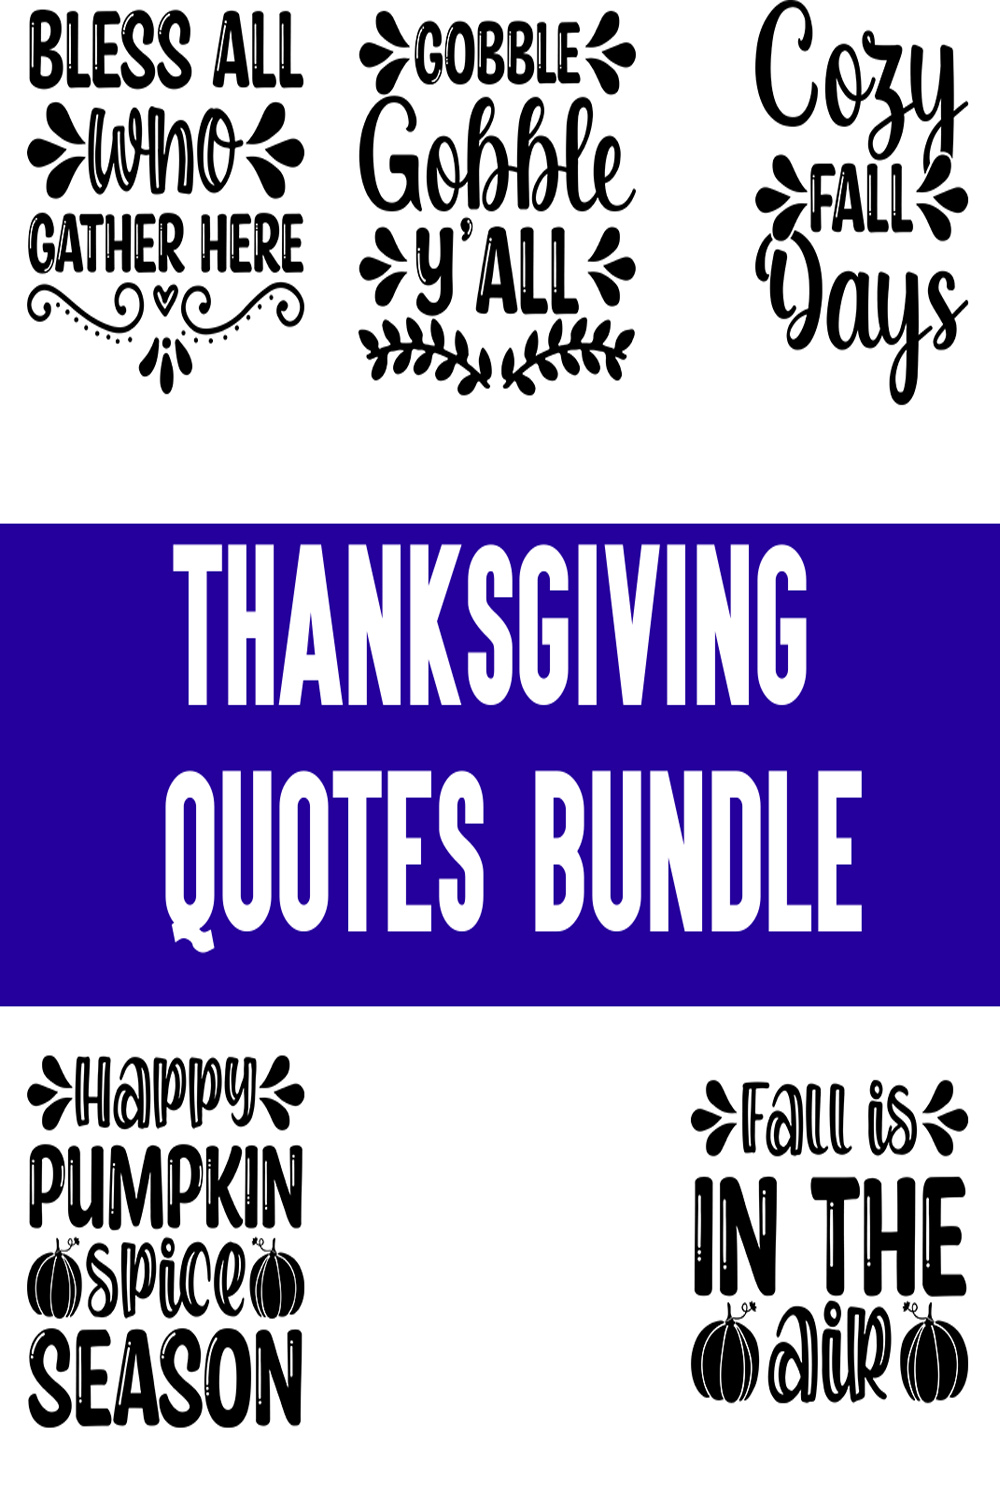 Thanksgiving Quotes Bundle pinterest preview image.